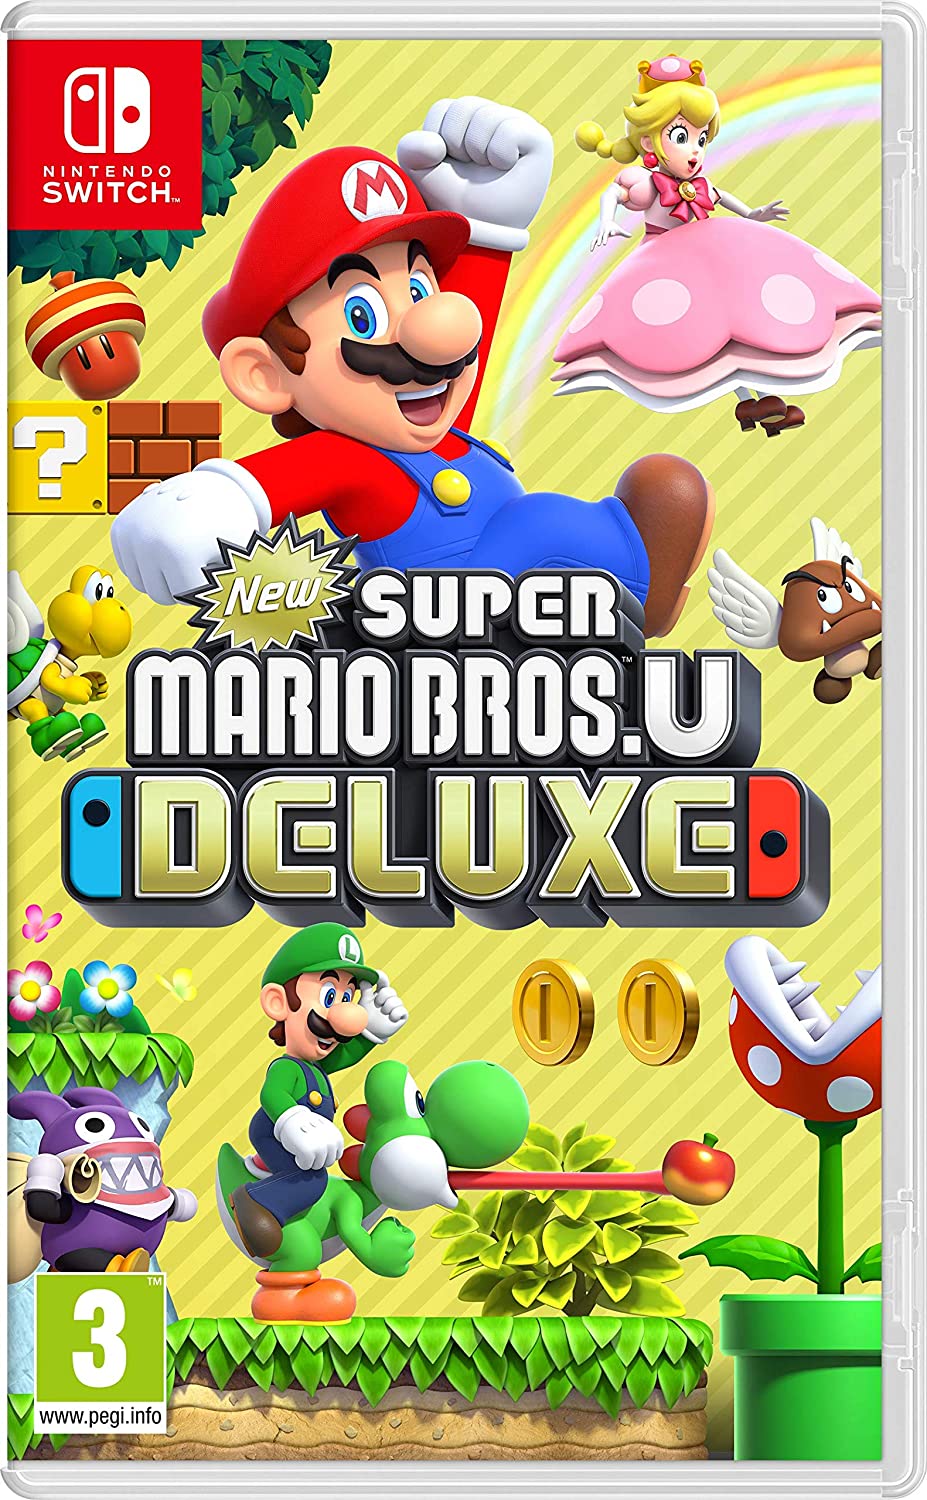 Couverture de New Super Mario Bros. U Deluxe pour Nintendo Switch.